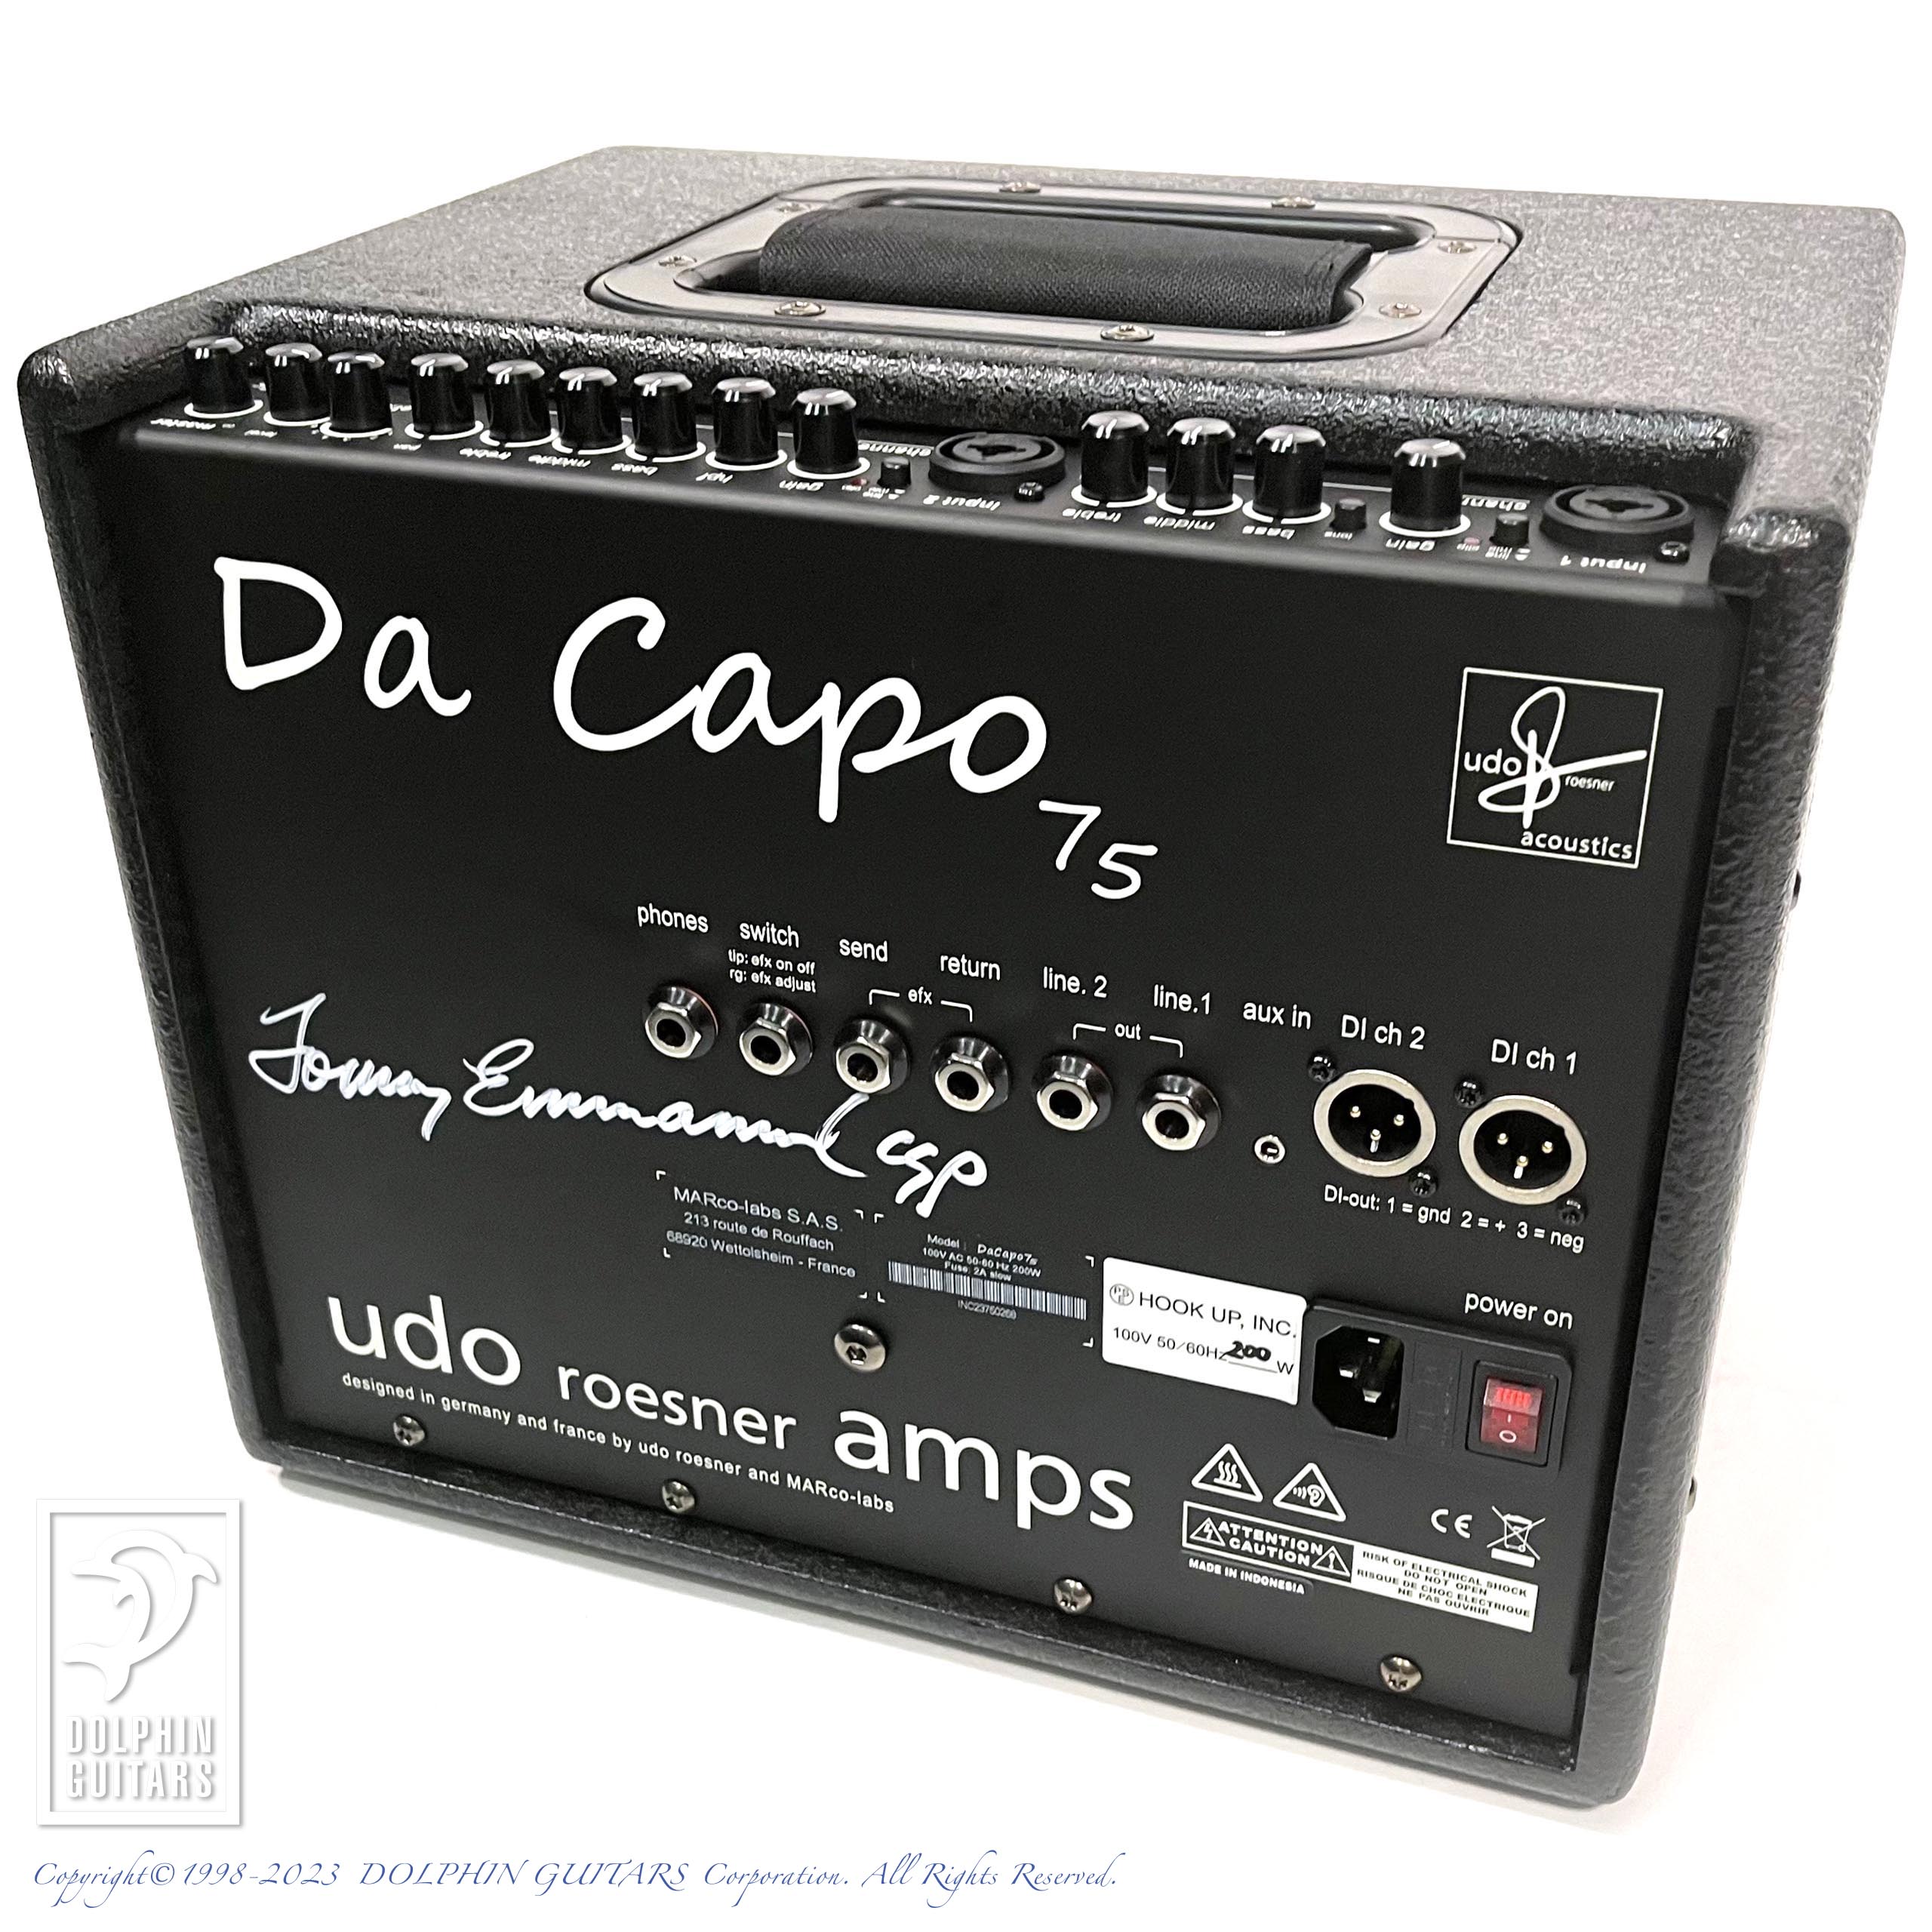 Udo Roesner Amps Da Capo 75|ドルフィンギターズ